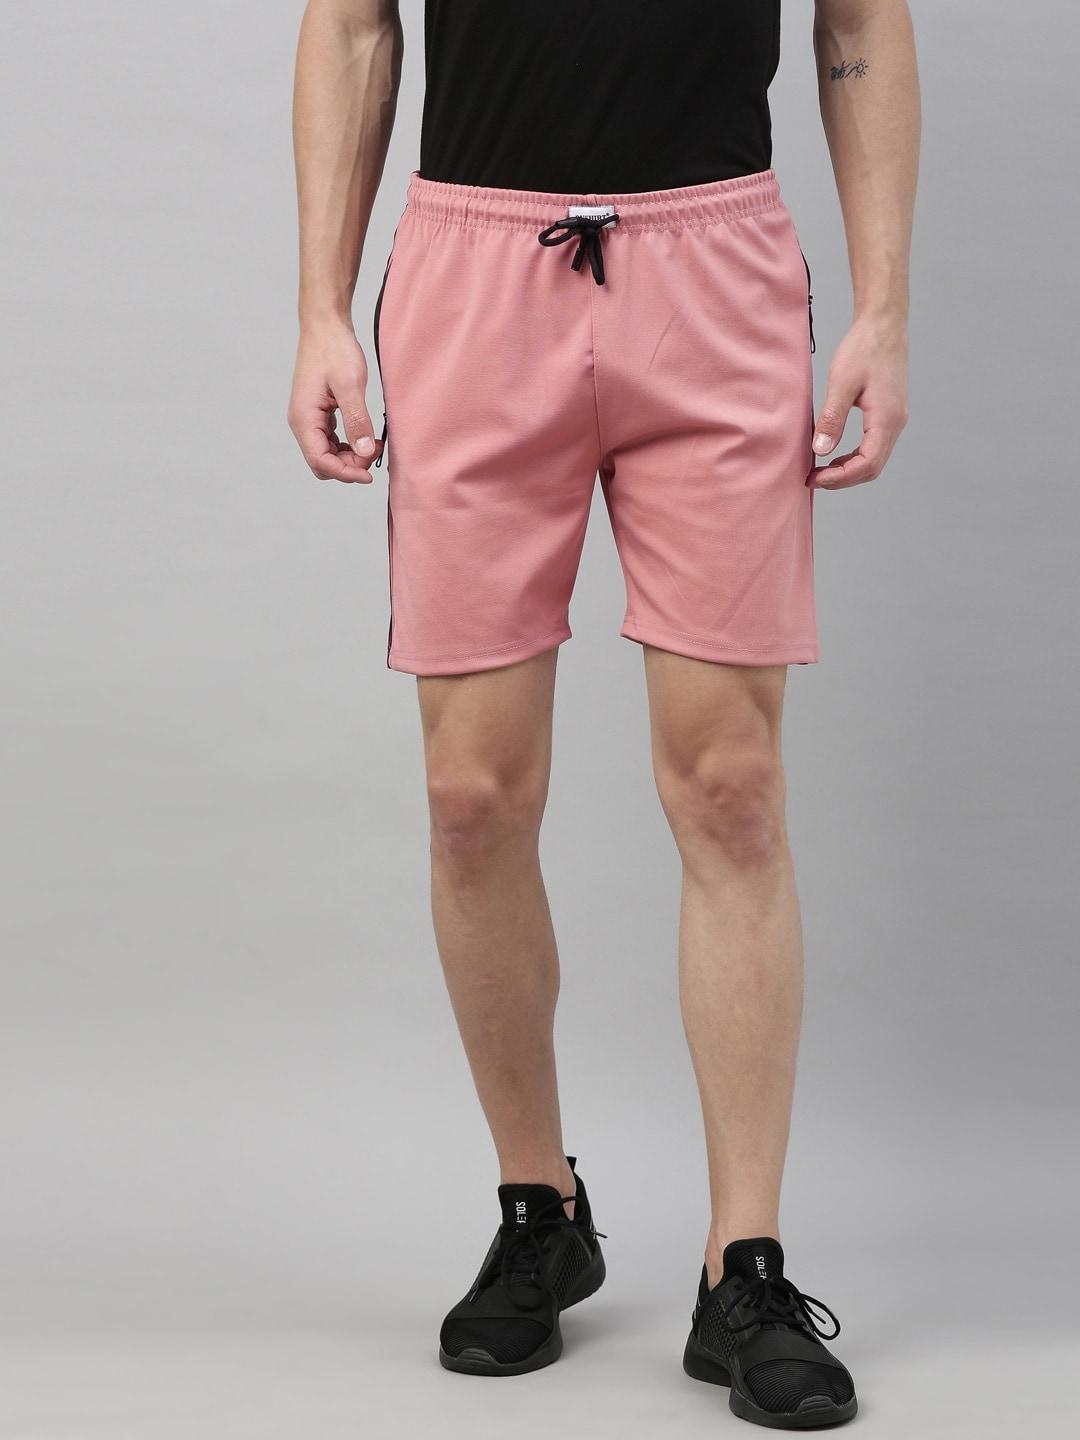 bushirt men peach-coloured solid regular fit sports shorts